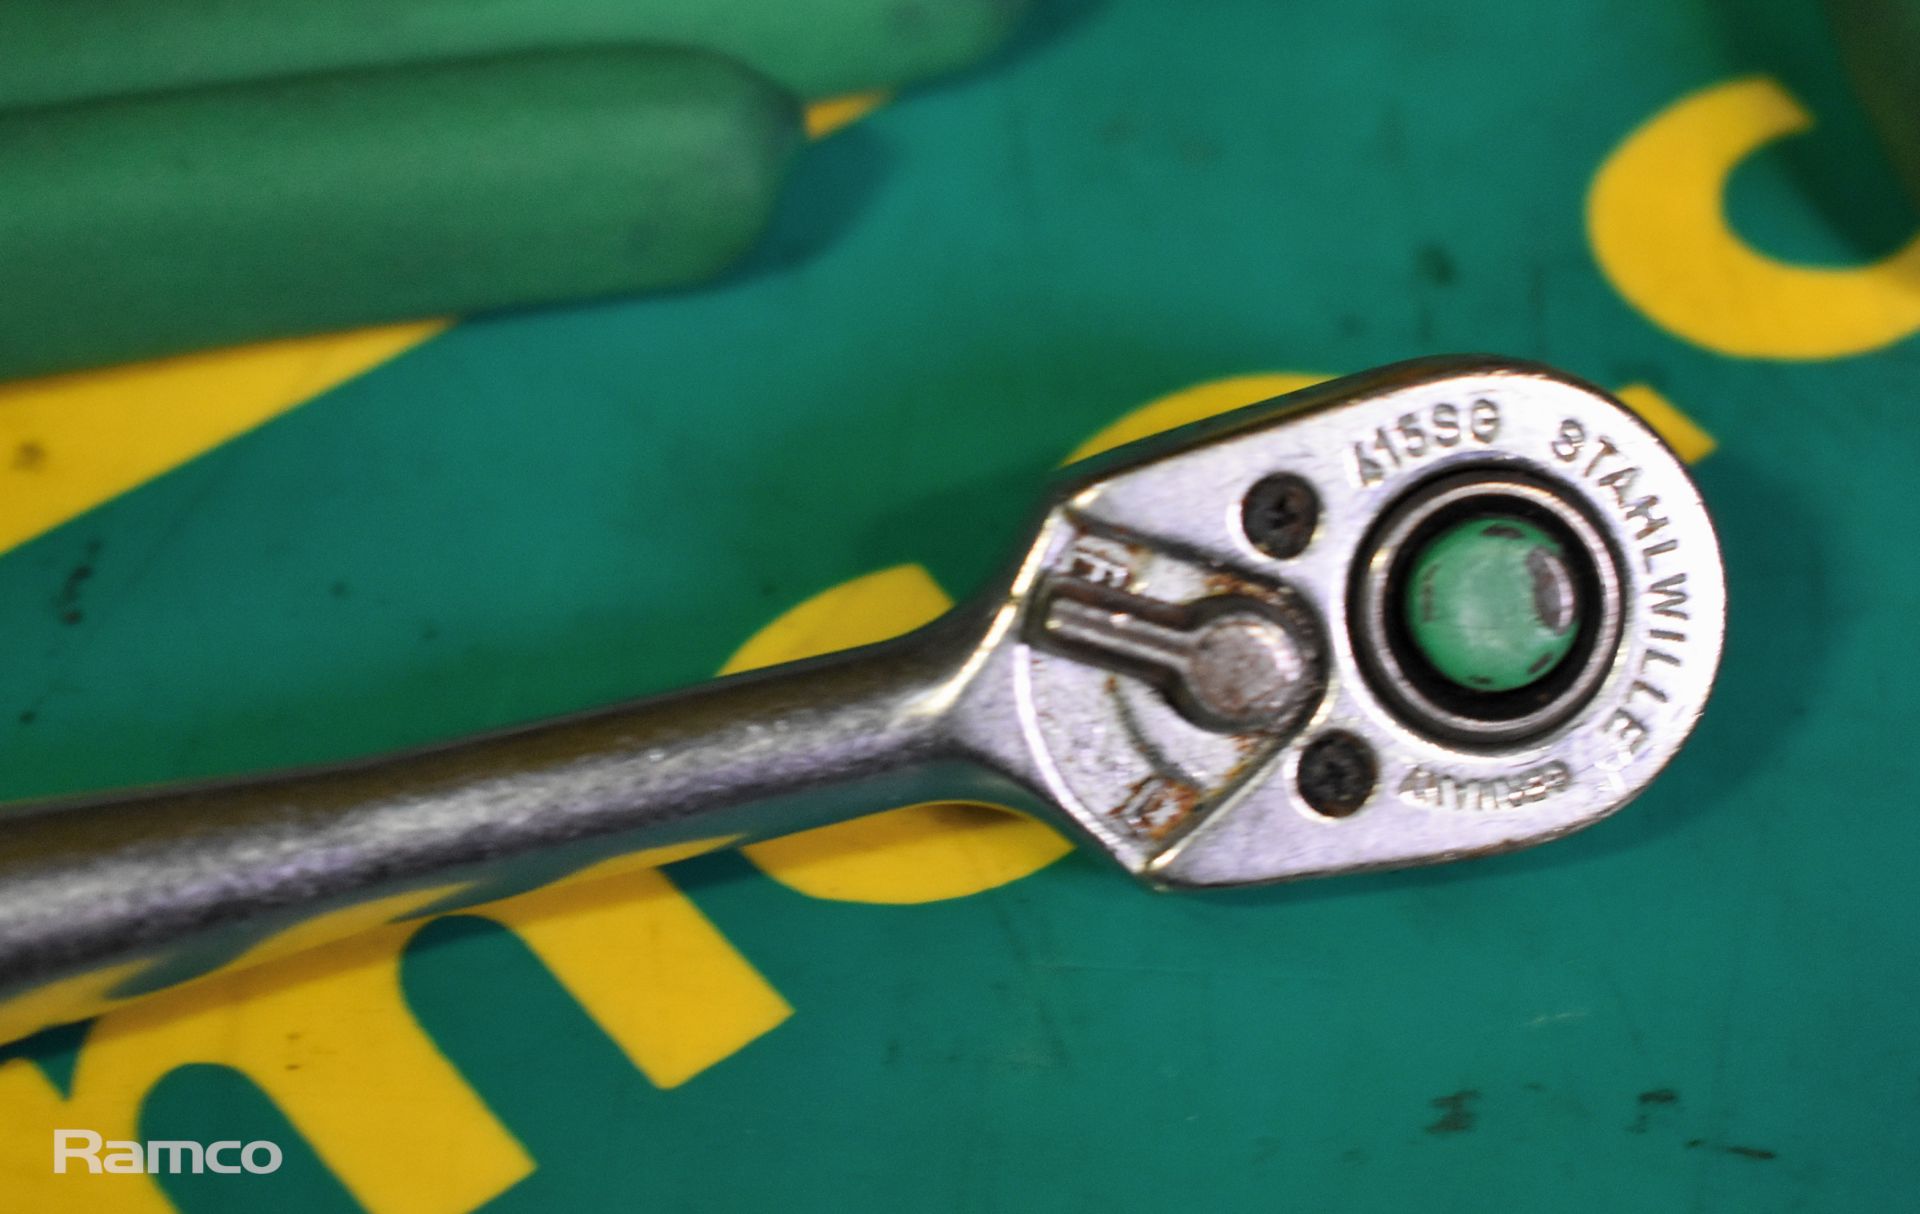 Stahlwille Tools - ratchets, screwdrivers, T-handle allen keys, sockets, feeler gauges, pliers - Image 4 of 10